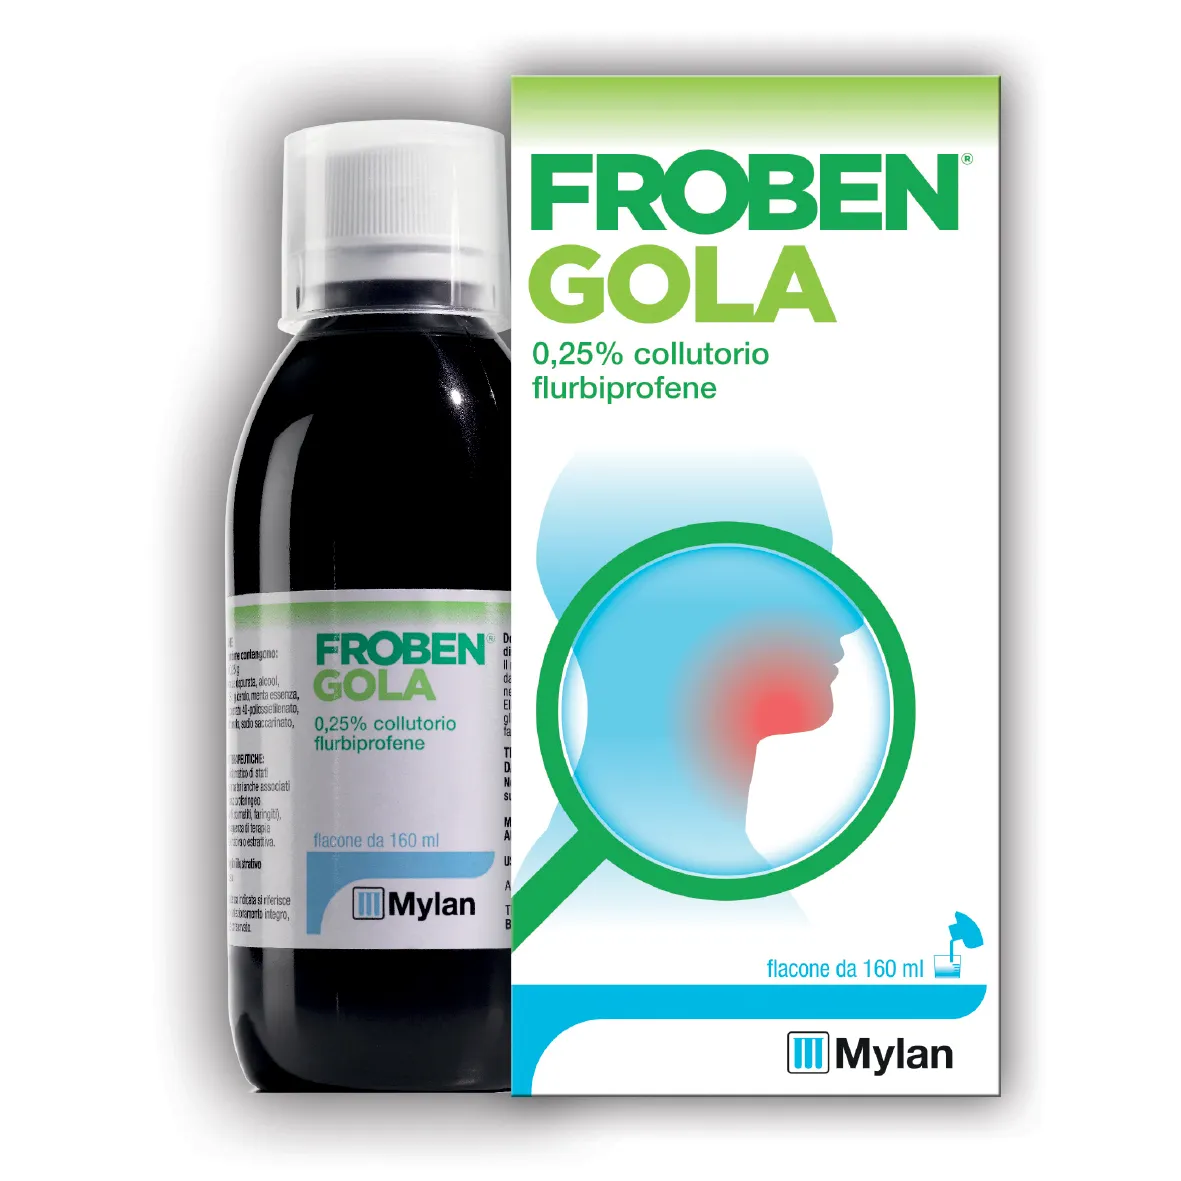 Froben Gola Collutorio 25 % Flurbipofene 160 ml – Collutorio Antinfiammatorio